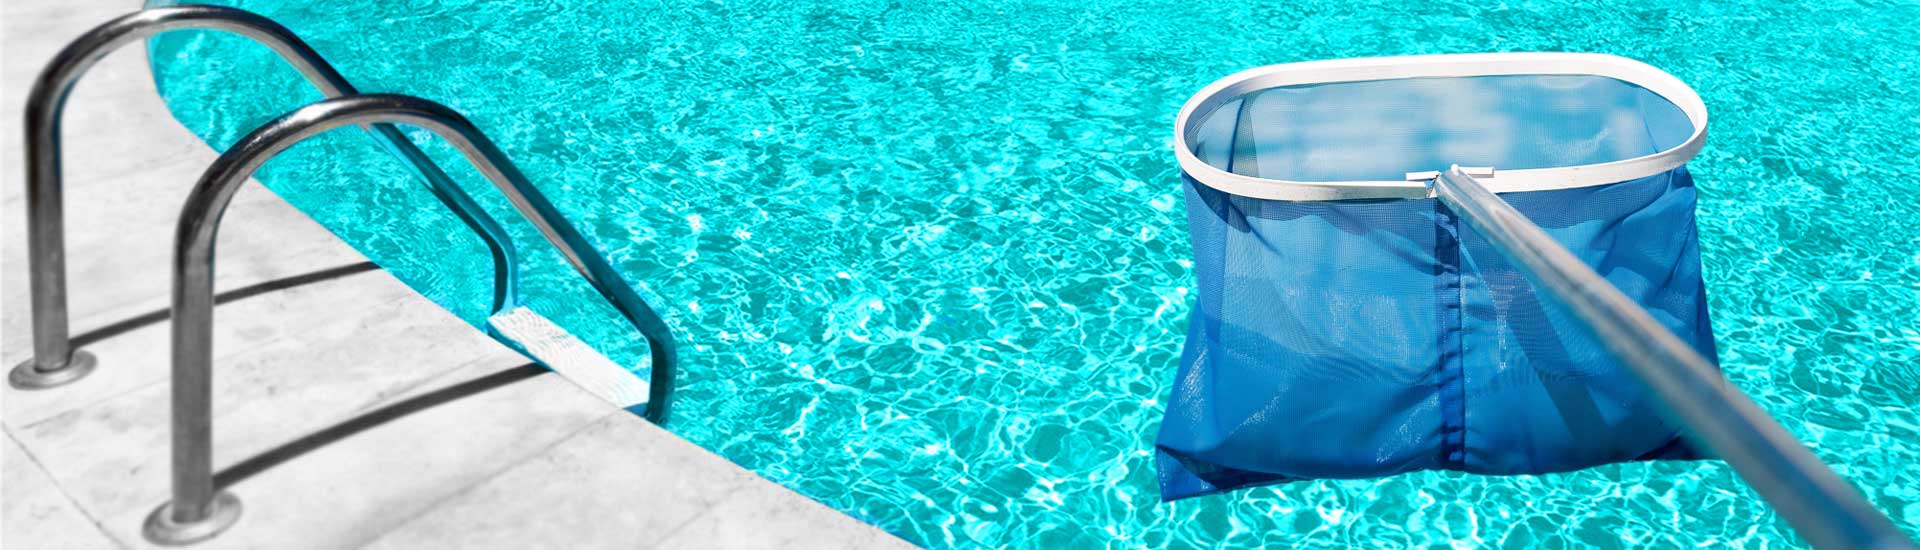 afo-swimming-pool-service-pool-maintenance